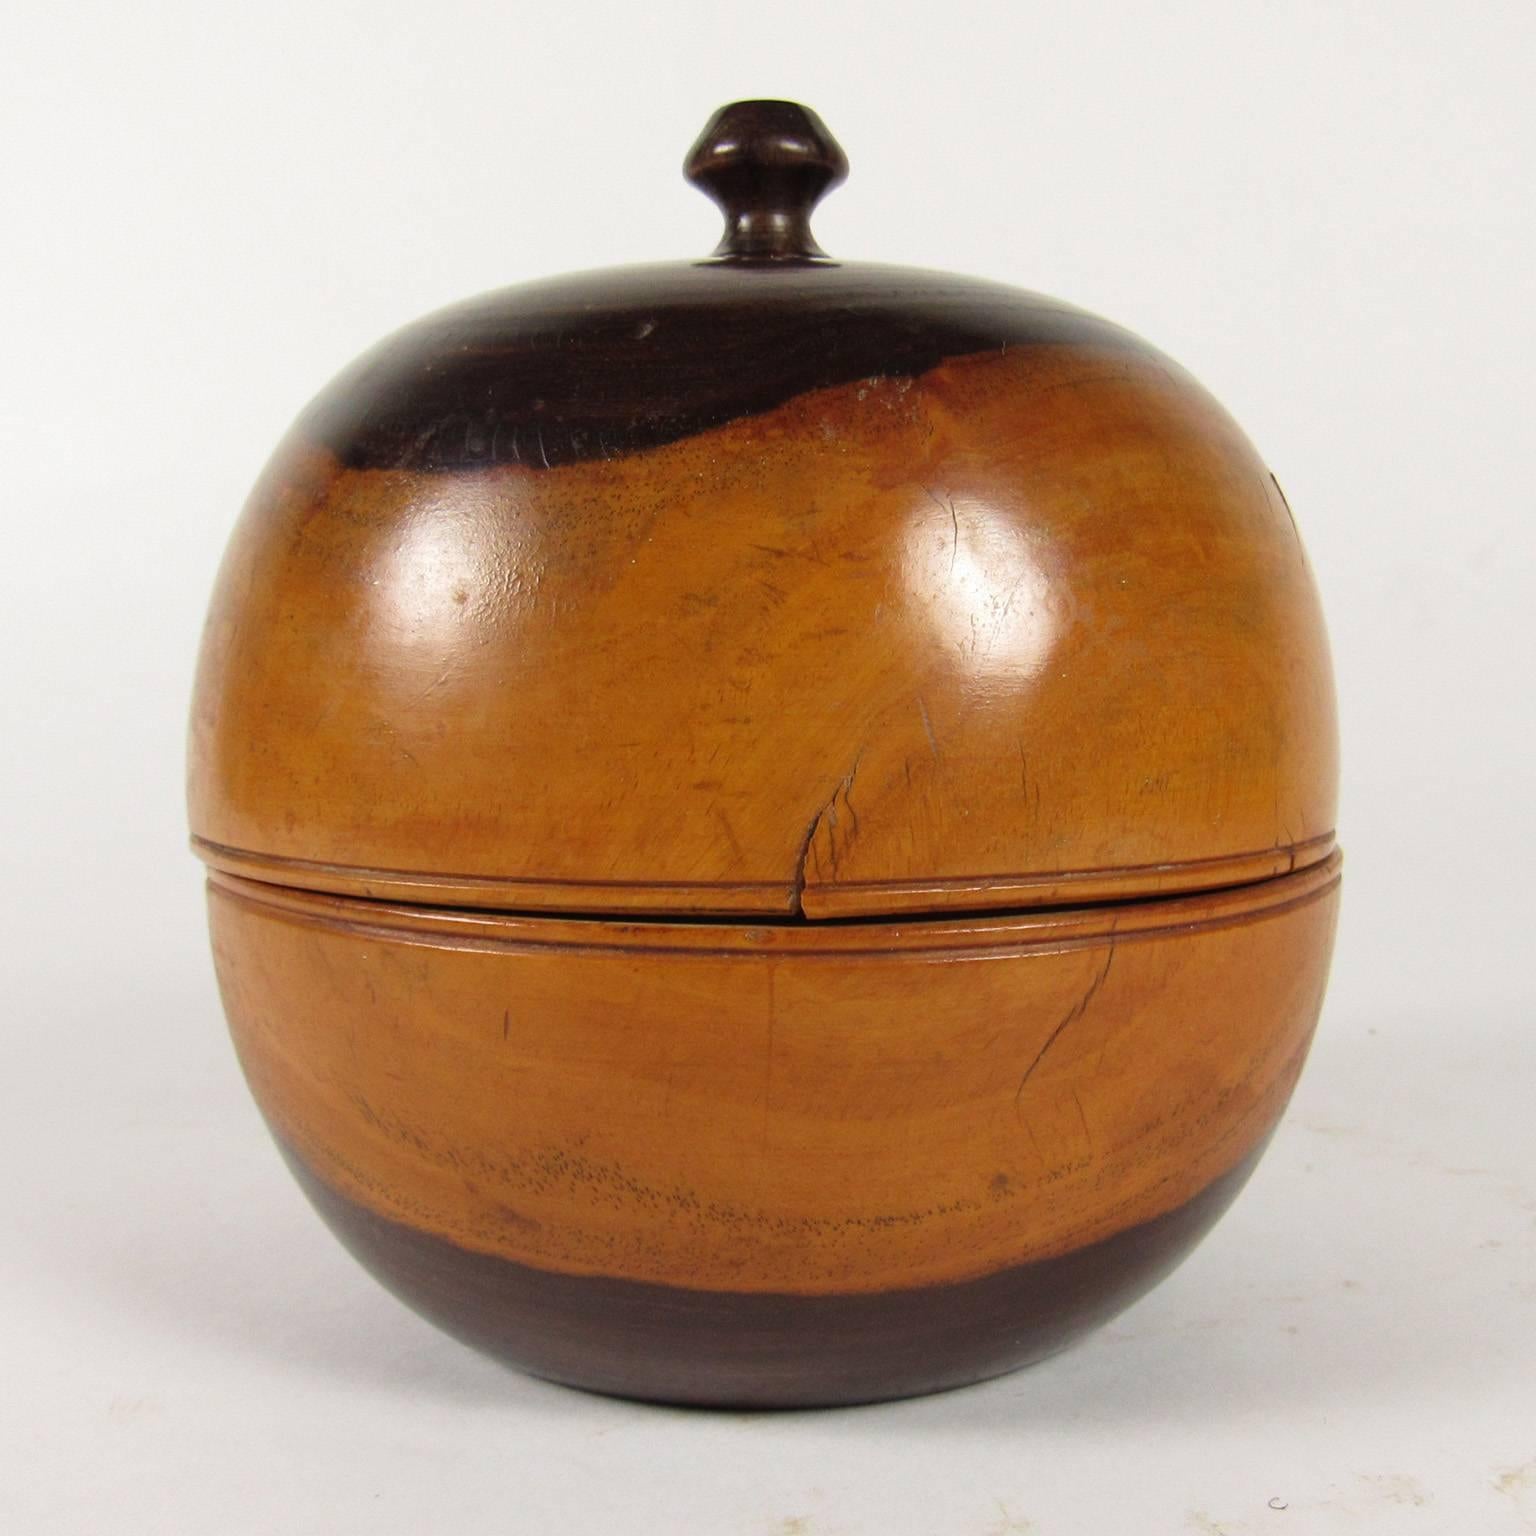 19th century lignum vitae treen round tea caddy. Measures: Height: 5 3/4 inches, diameter: 5 inches.